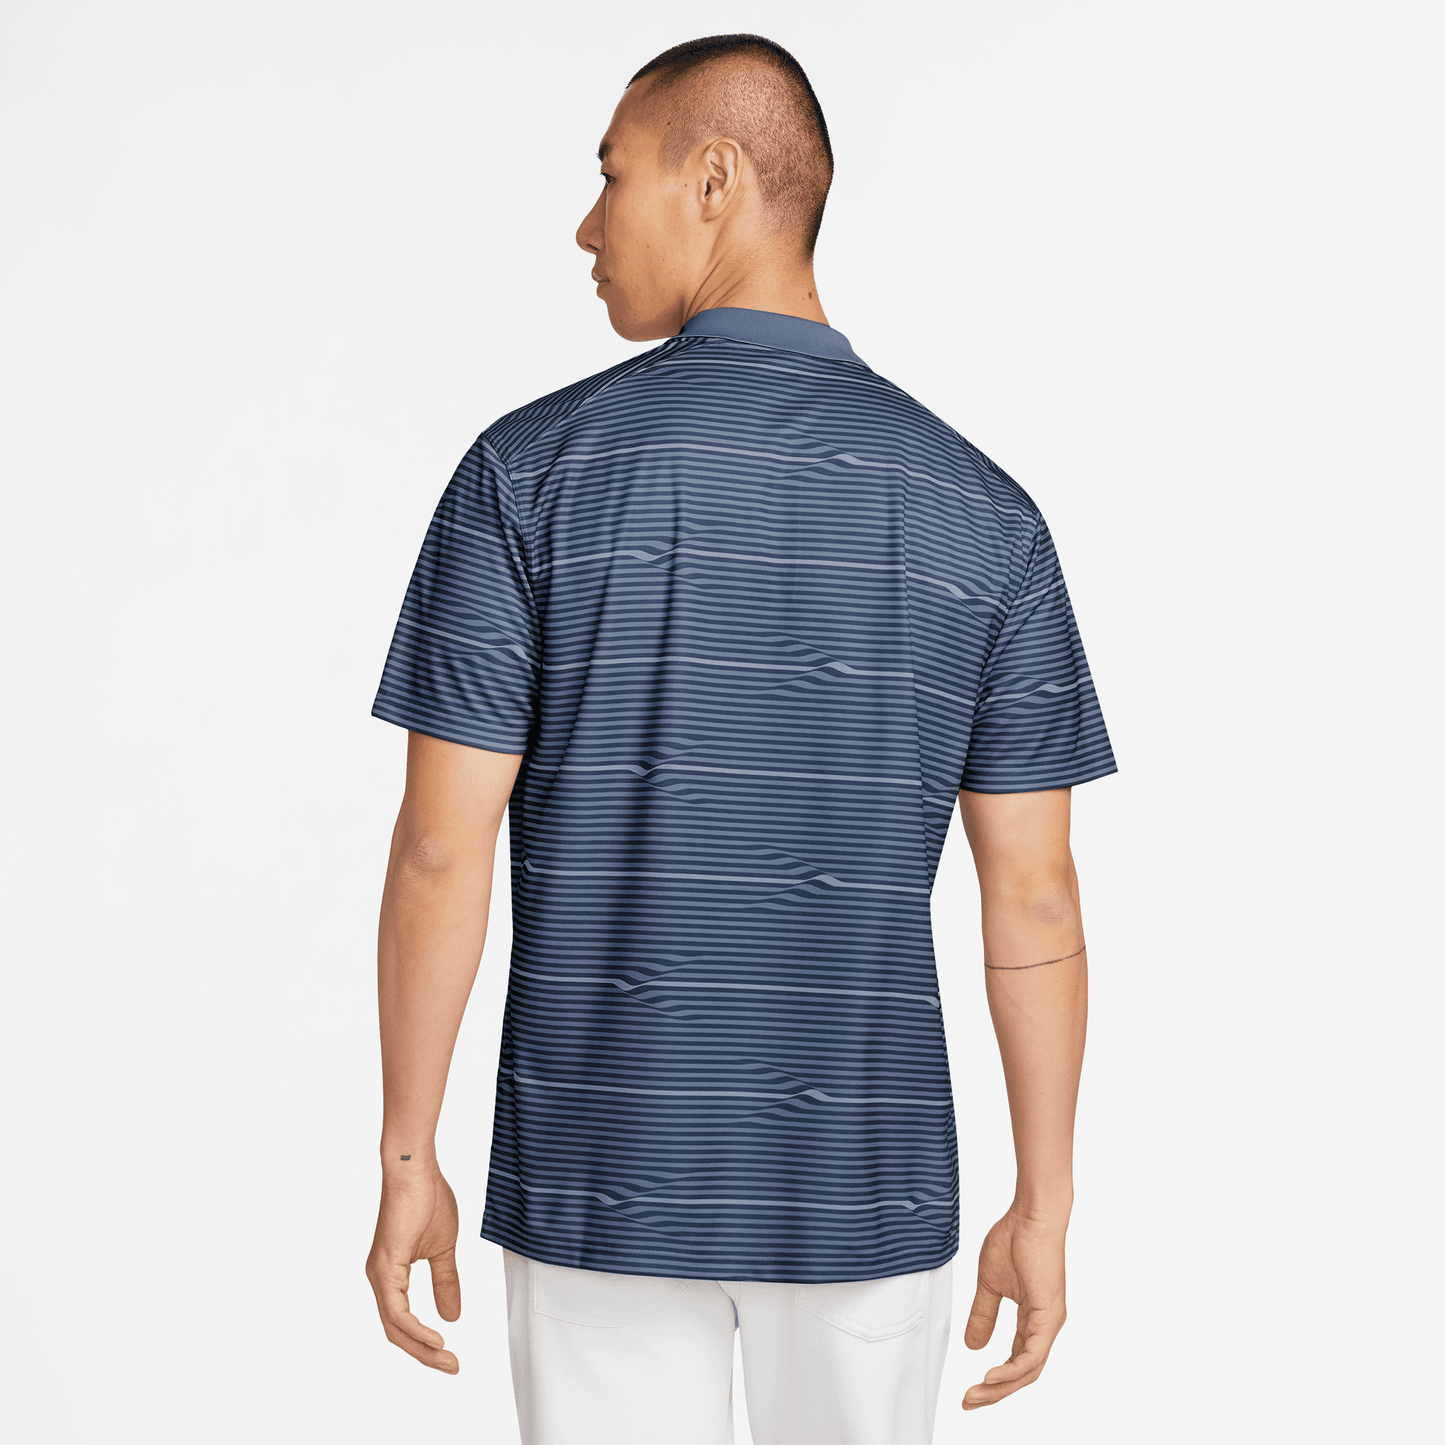 Nike Golf Victory + Dri-FIT Ripple Polo Shirt FD5829 - 410   